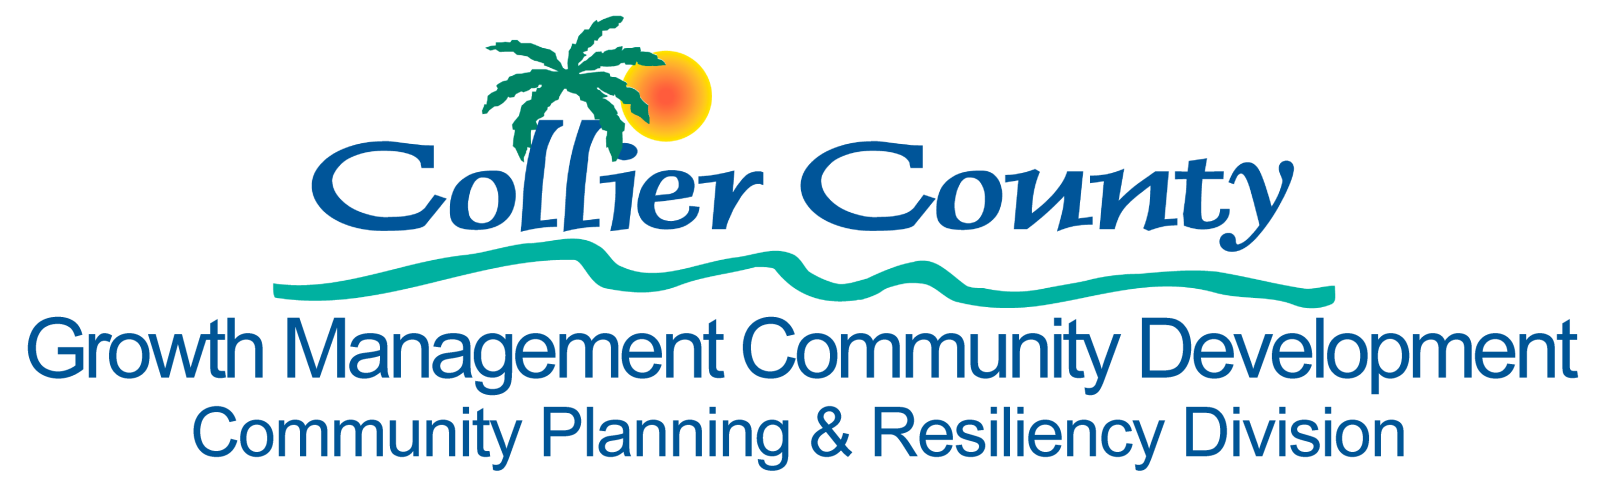 Community_Planning_Resiliency Logo